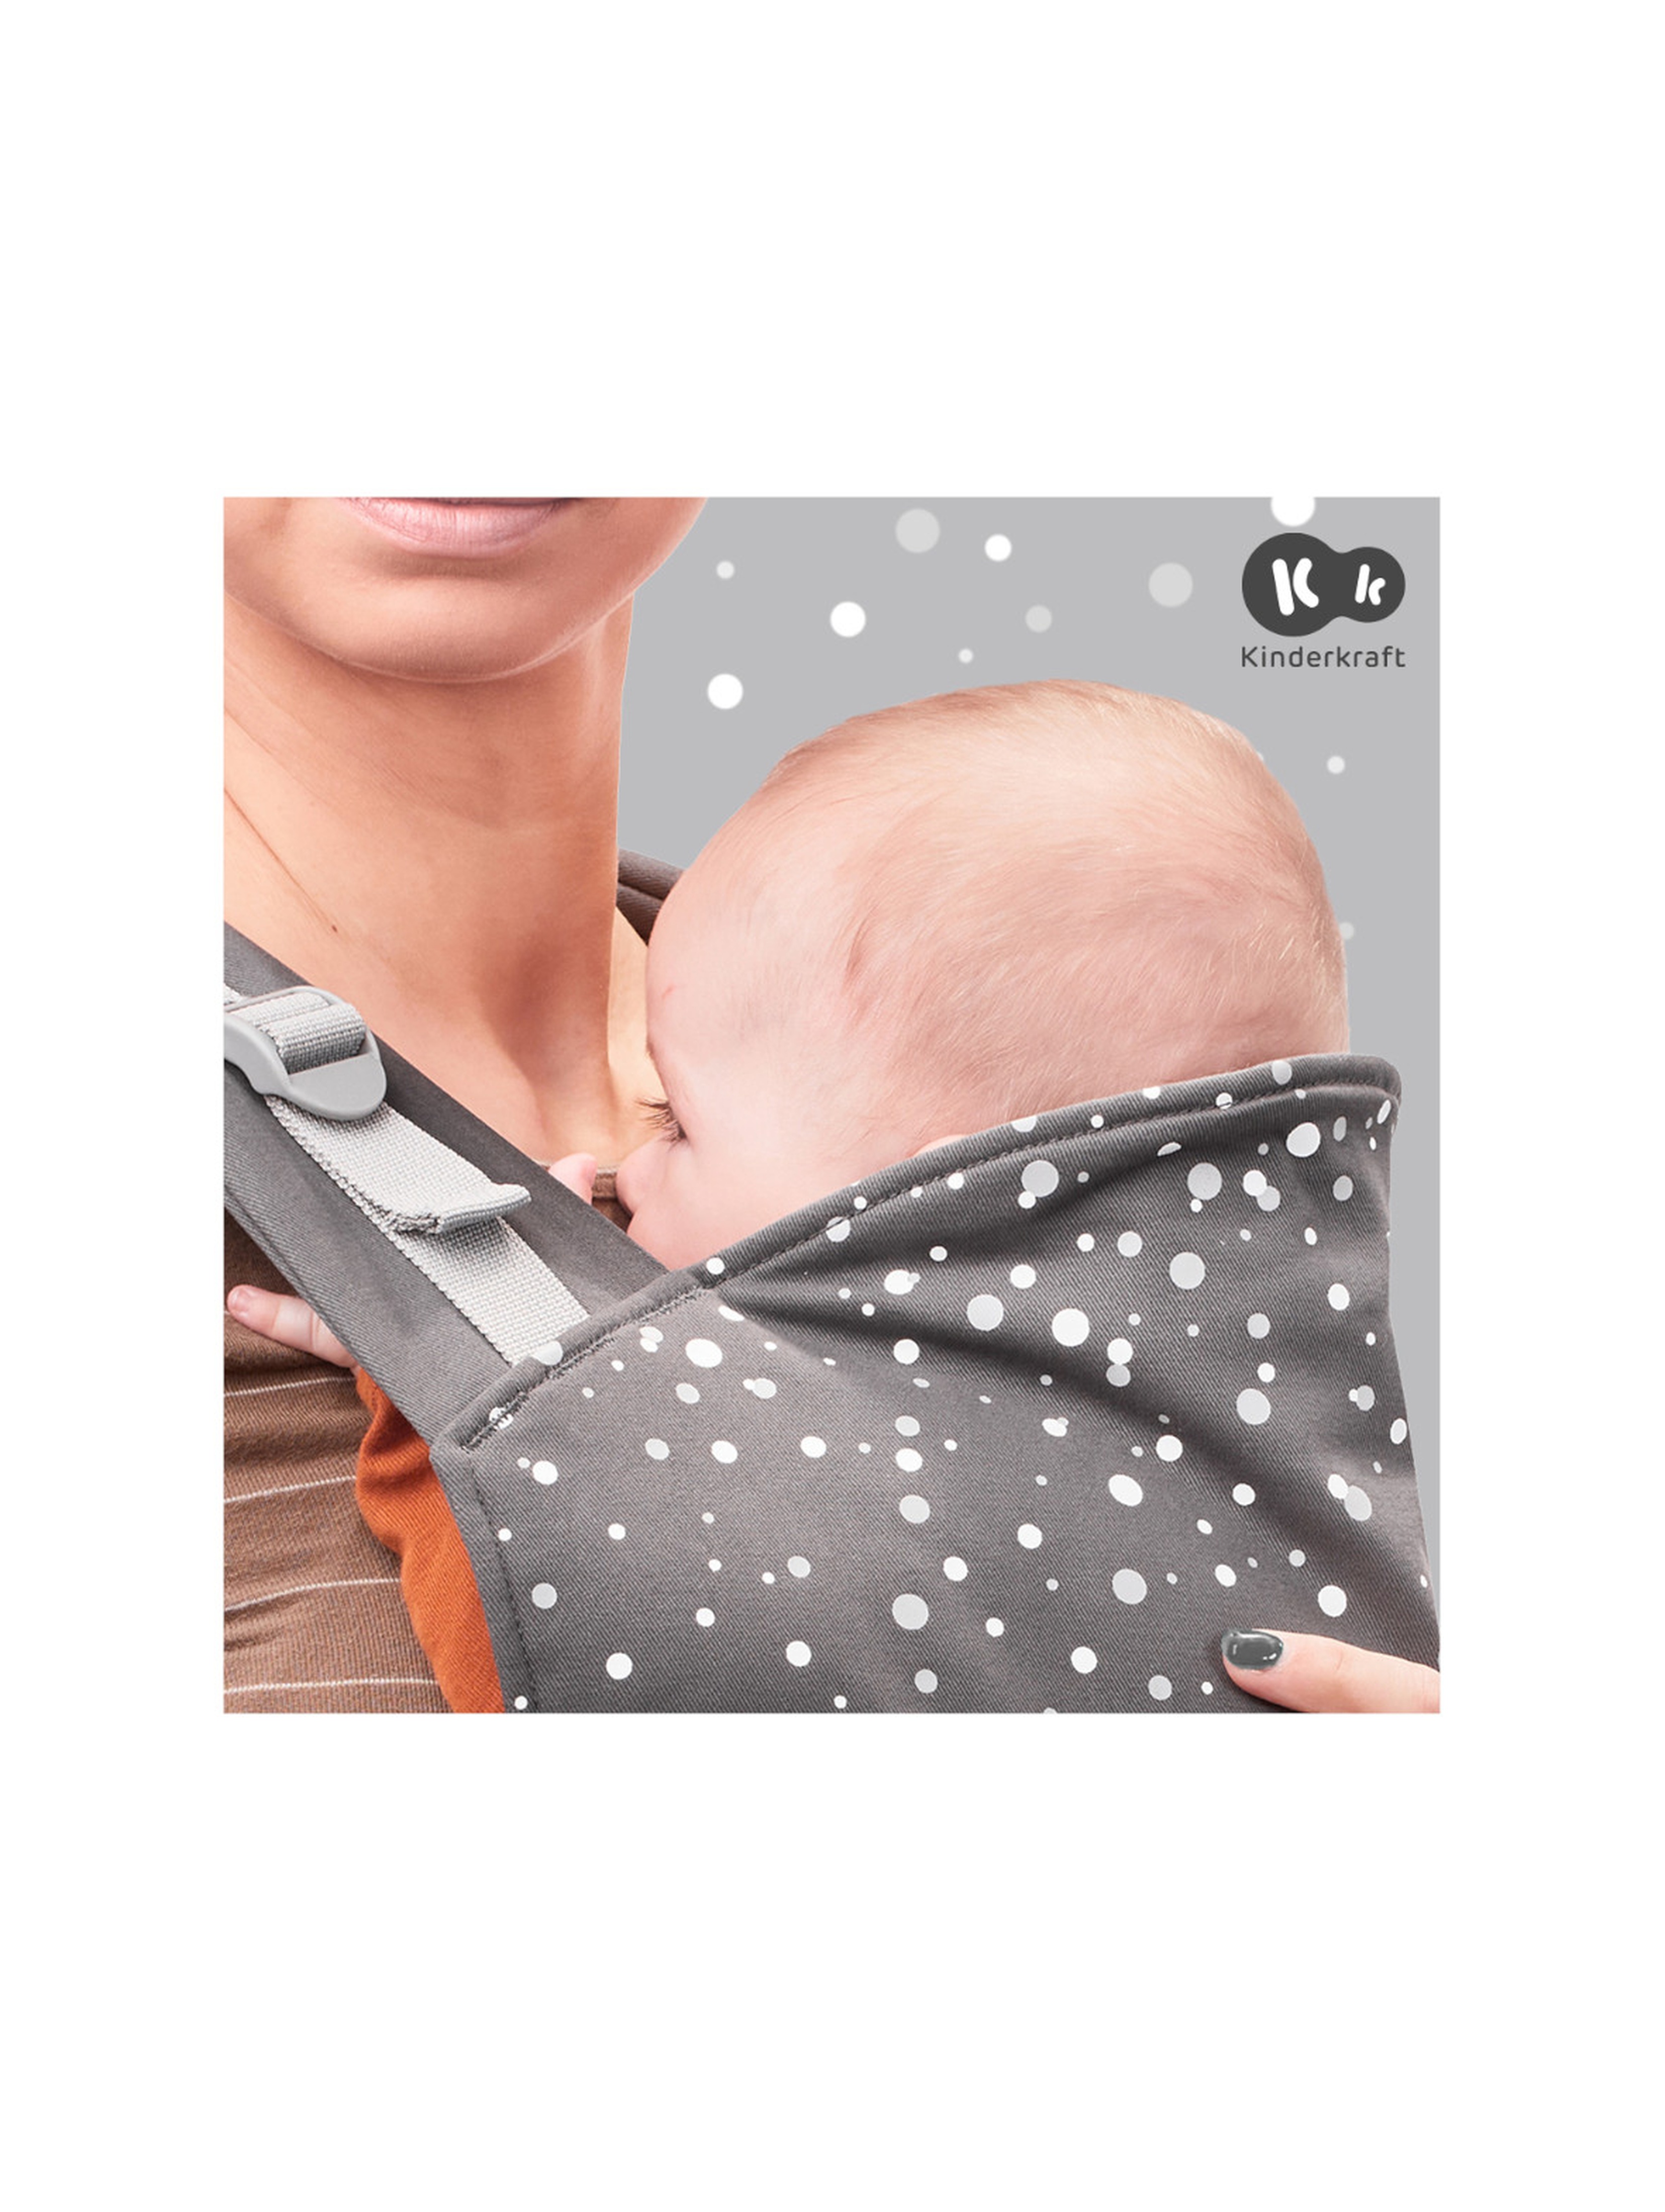 Kinderkraft nosidełko - Nino confetti szare